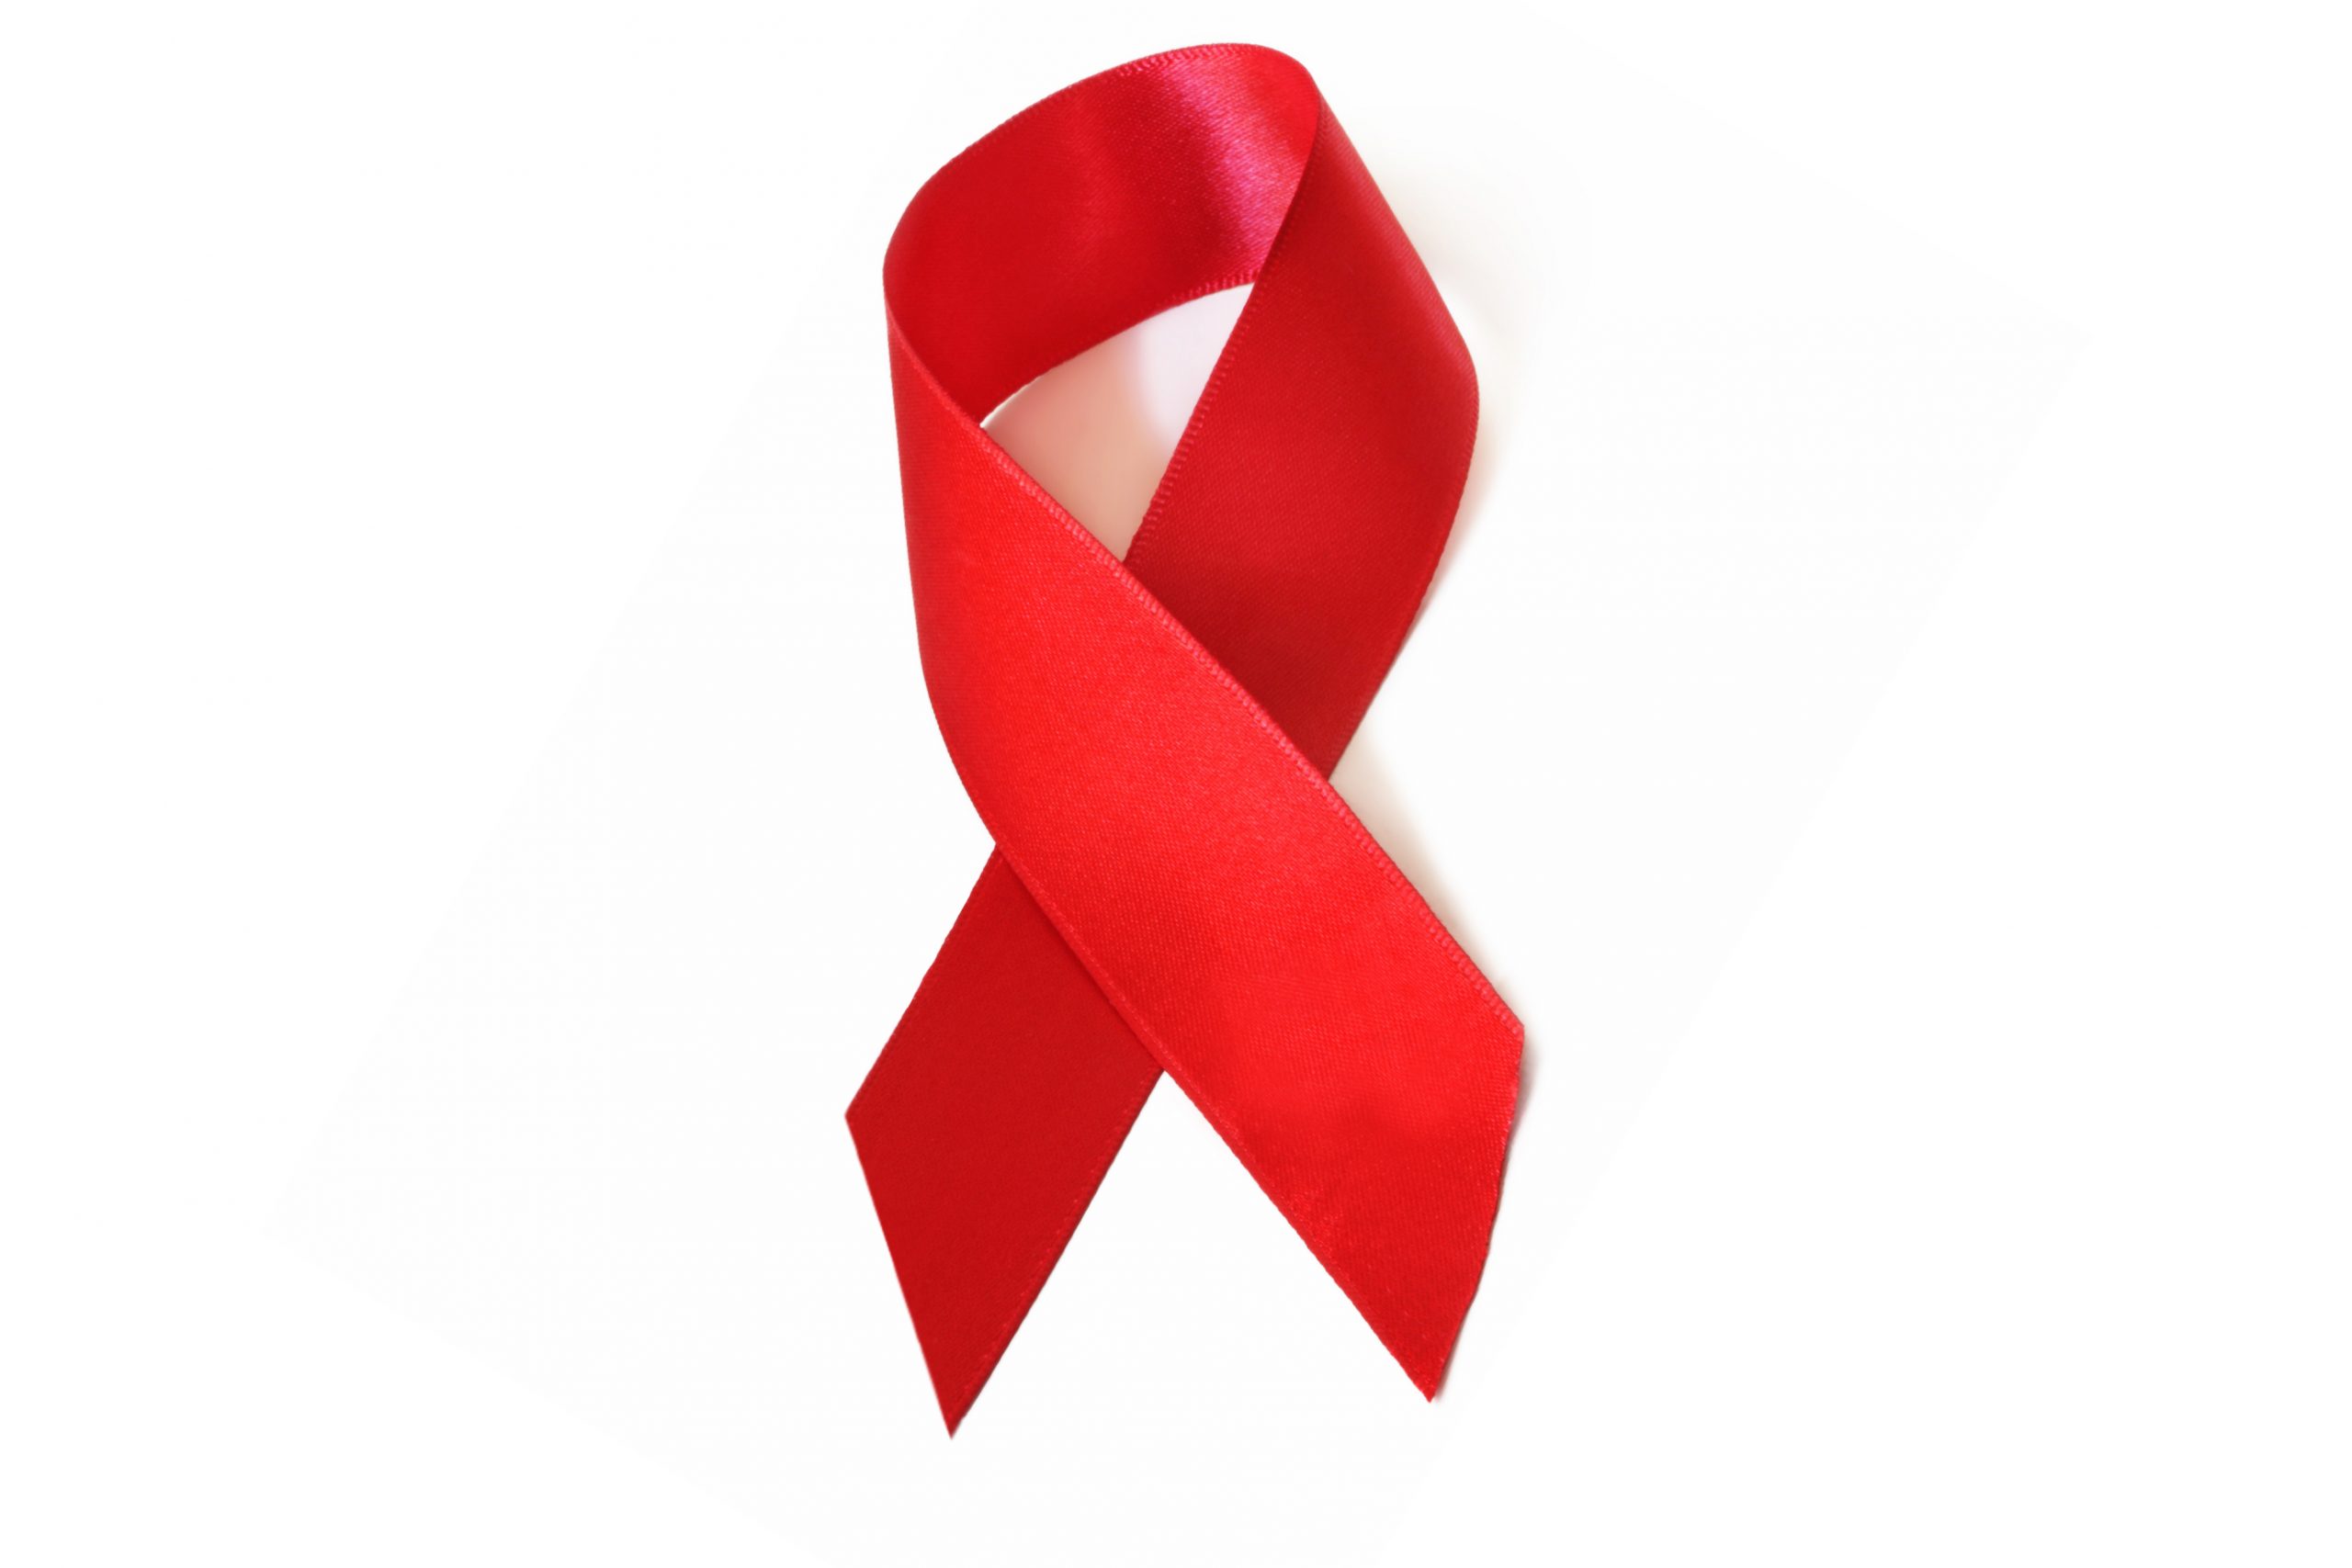 aids-ribbon